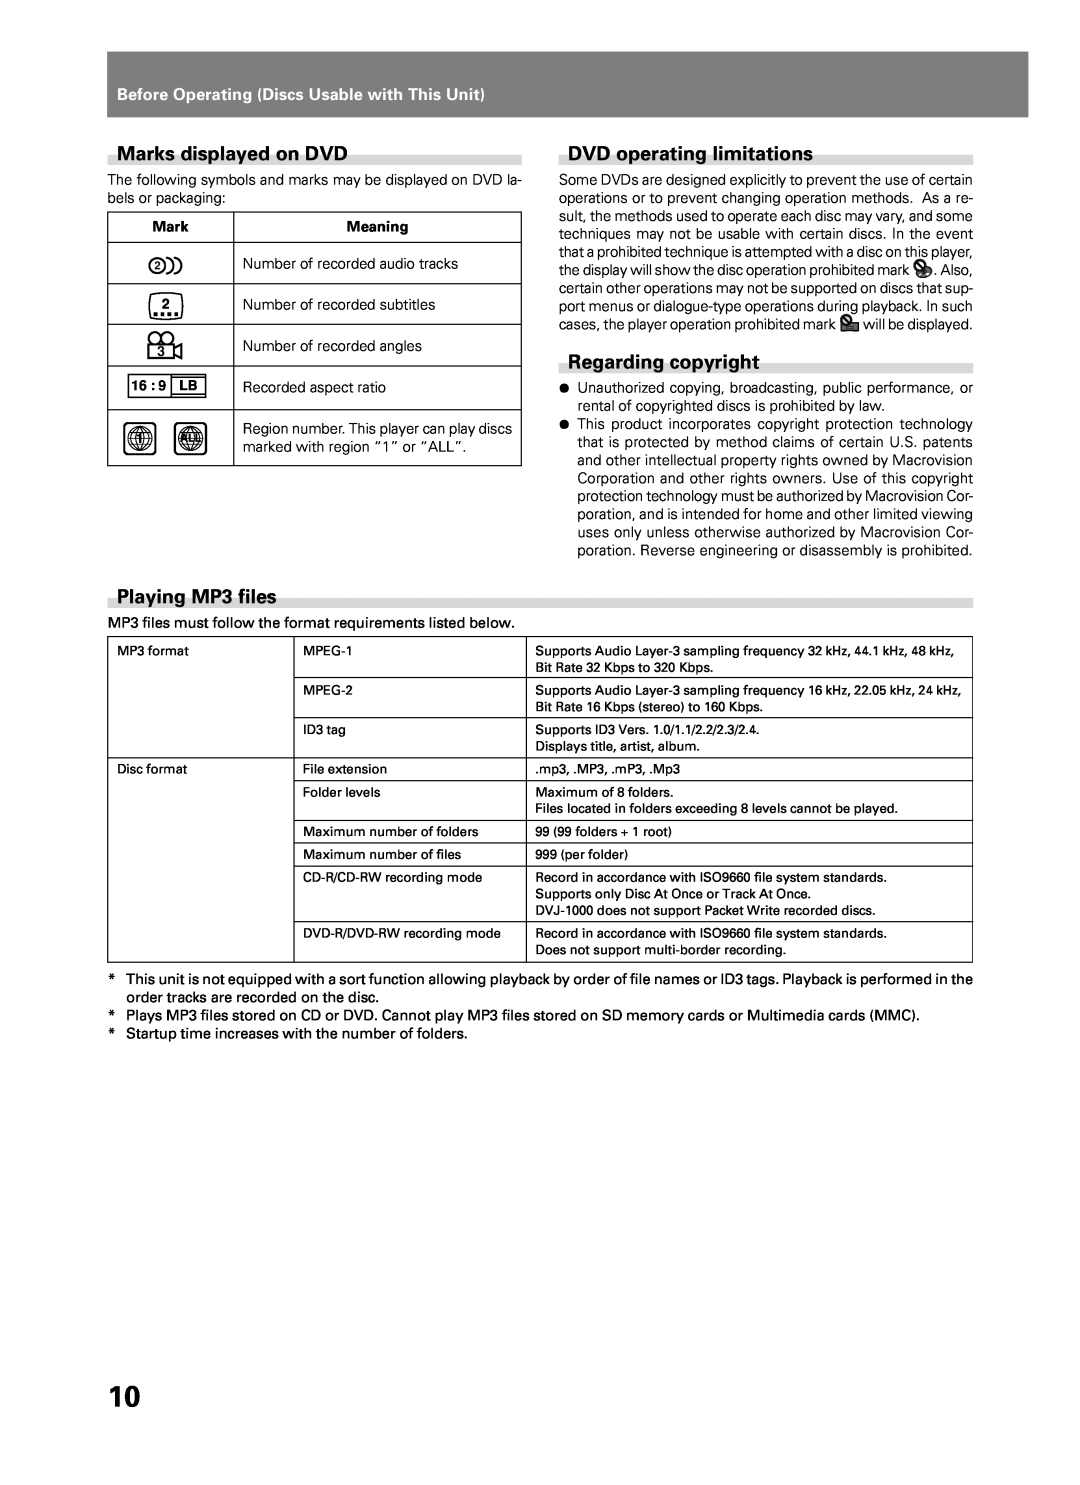 Pioneer DVJ-1000 manual Marks displayed on DVD, DVD operating limitations, Regarding copyright, Playing MP3 files 